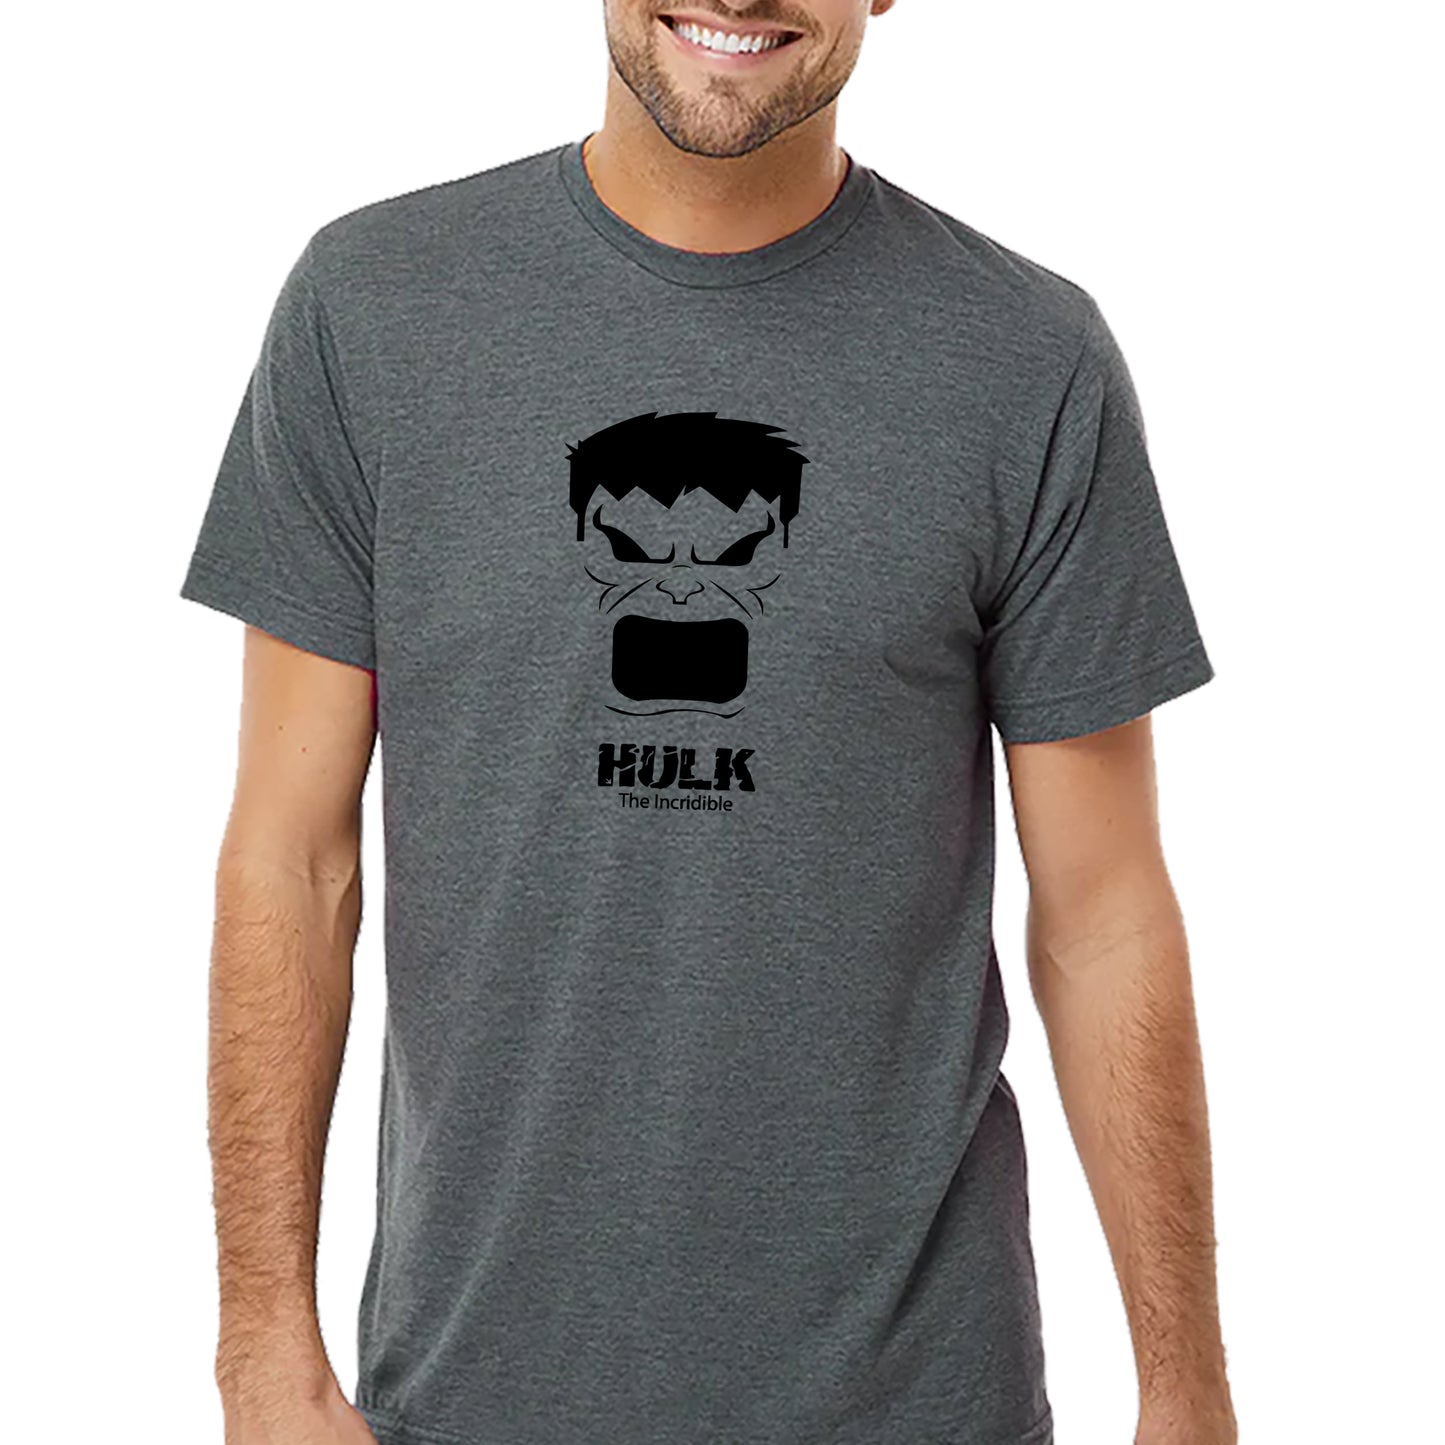 Inredible Hulk T-shirt